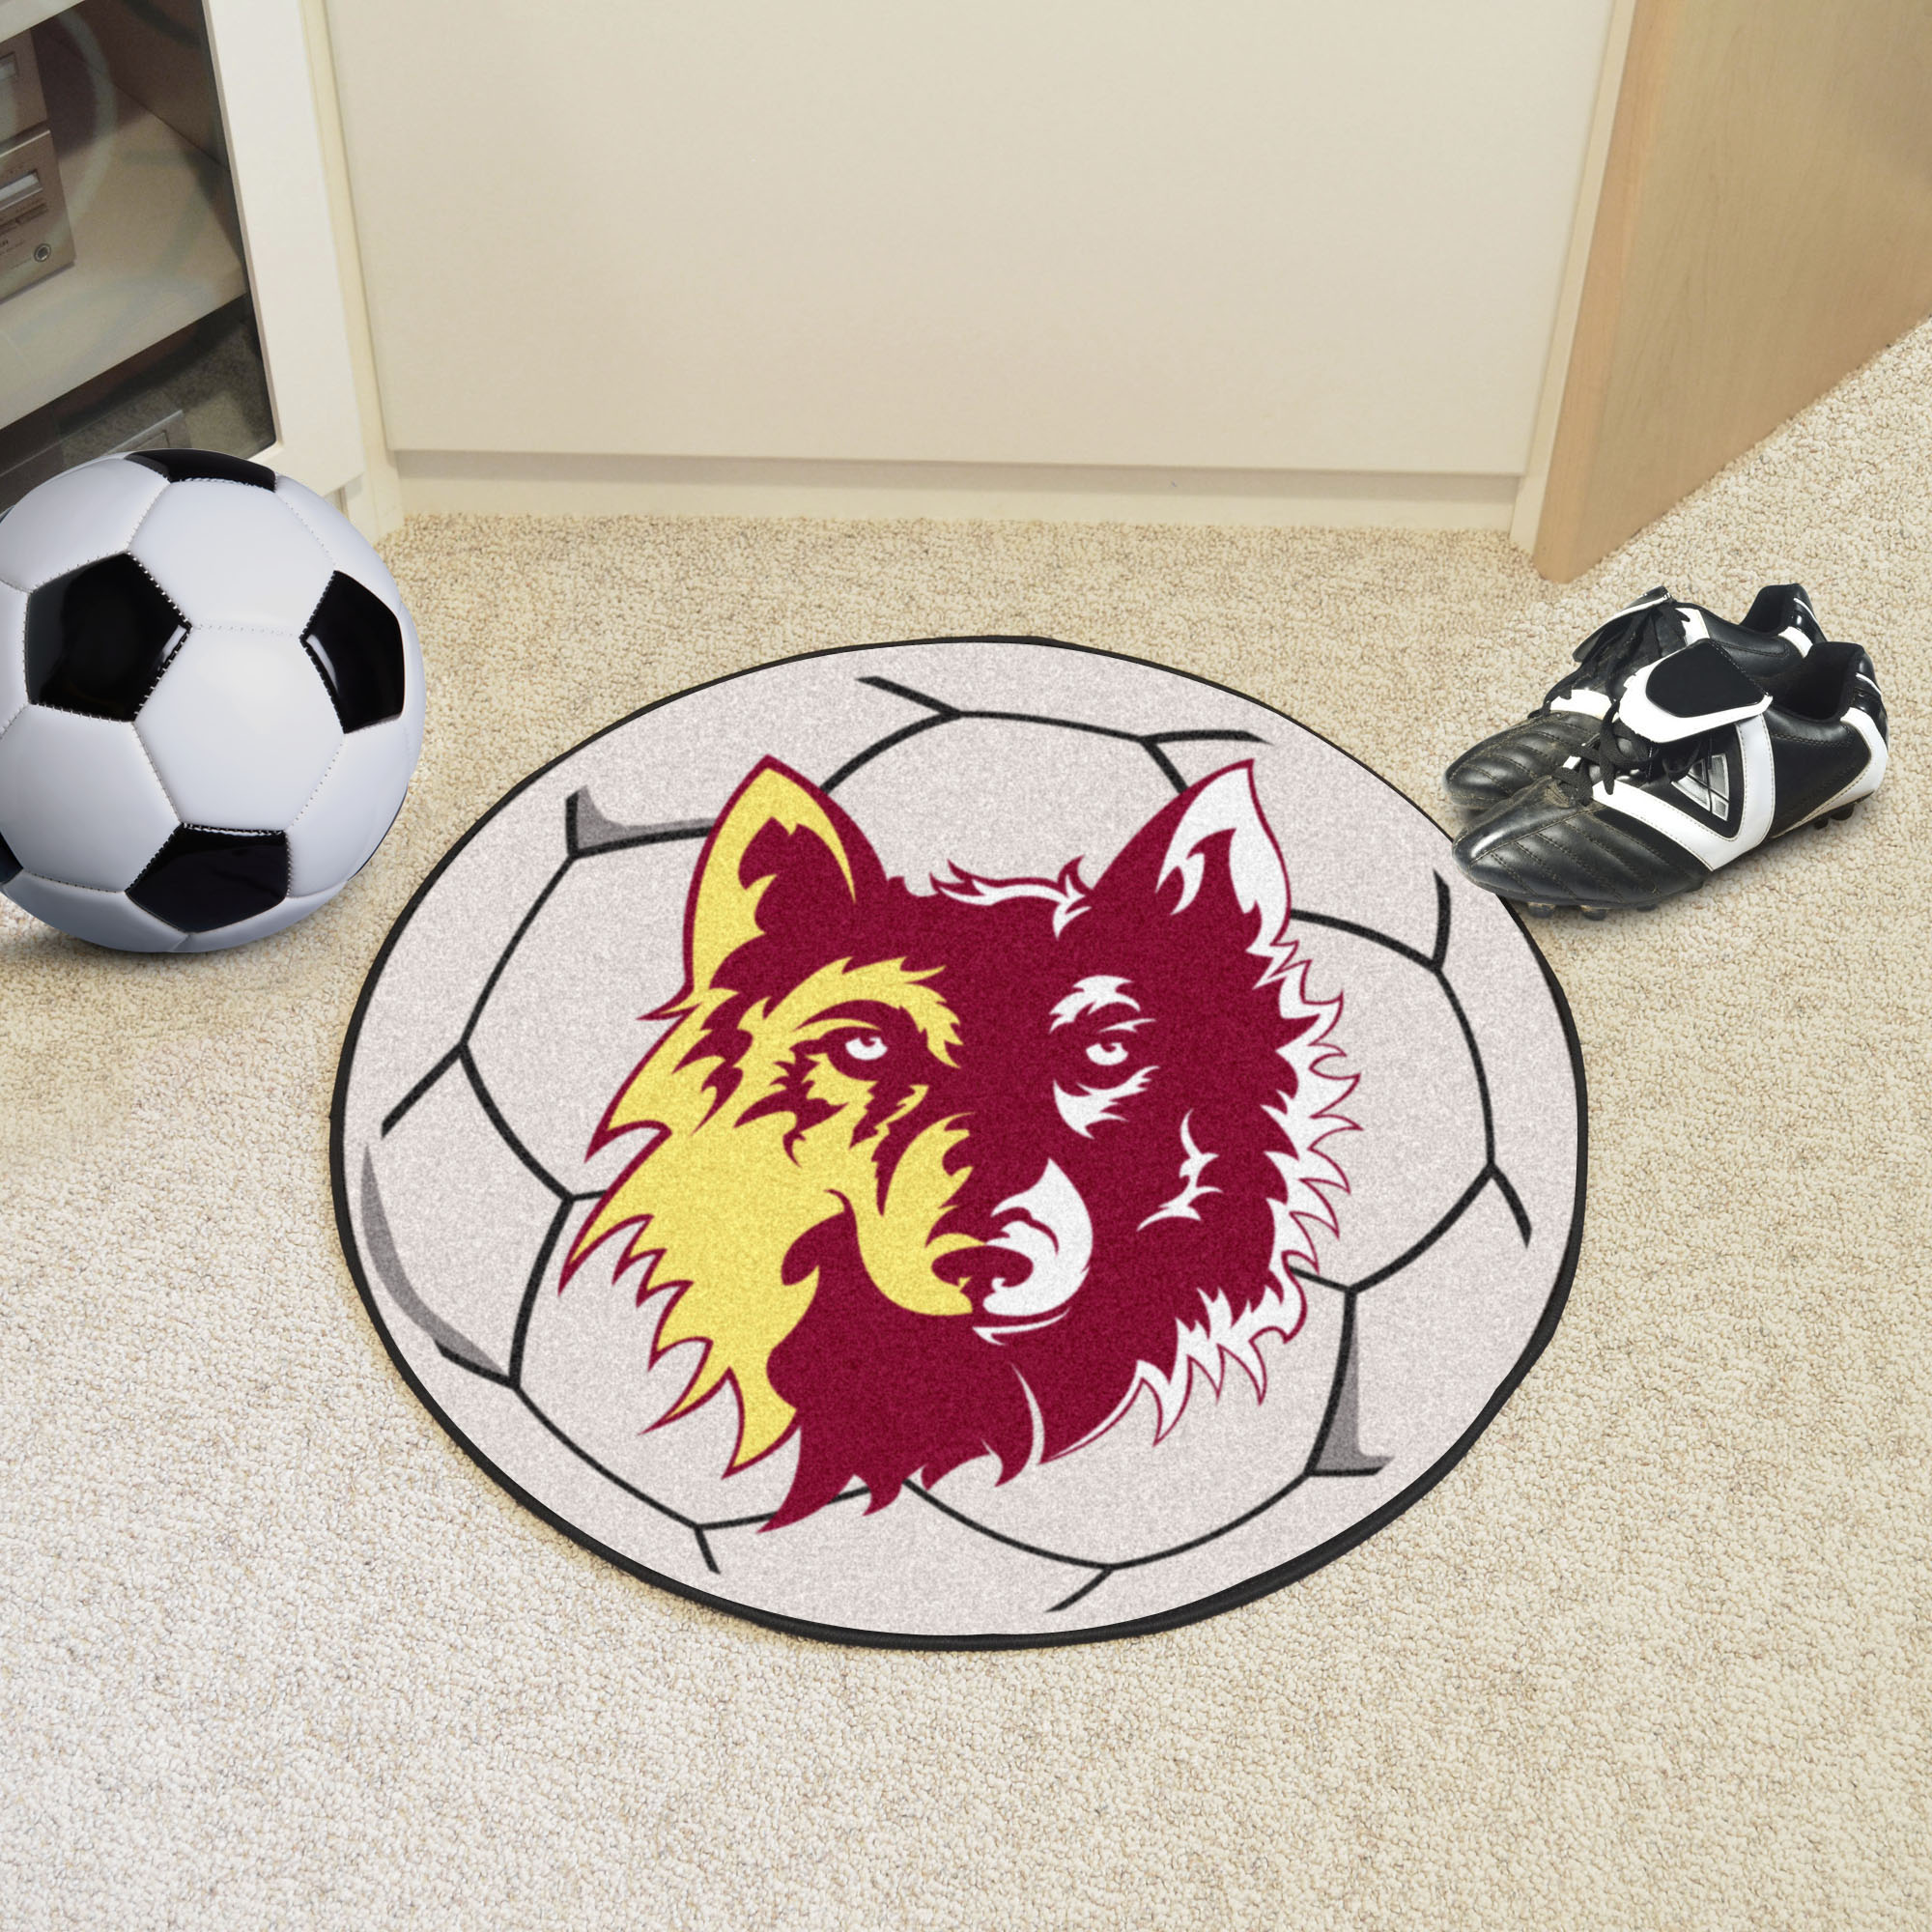 Northern State University Ball Shaped Area Rugs (Ball Shaped Area Rugs: Soccer Ball)